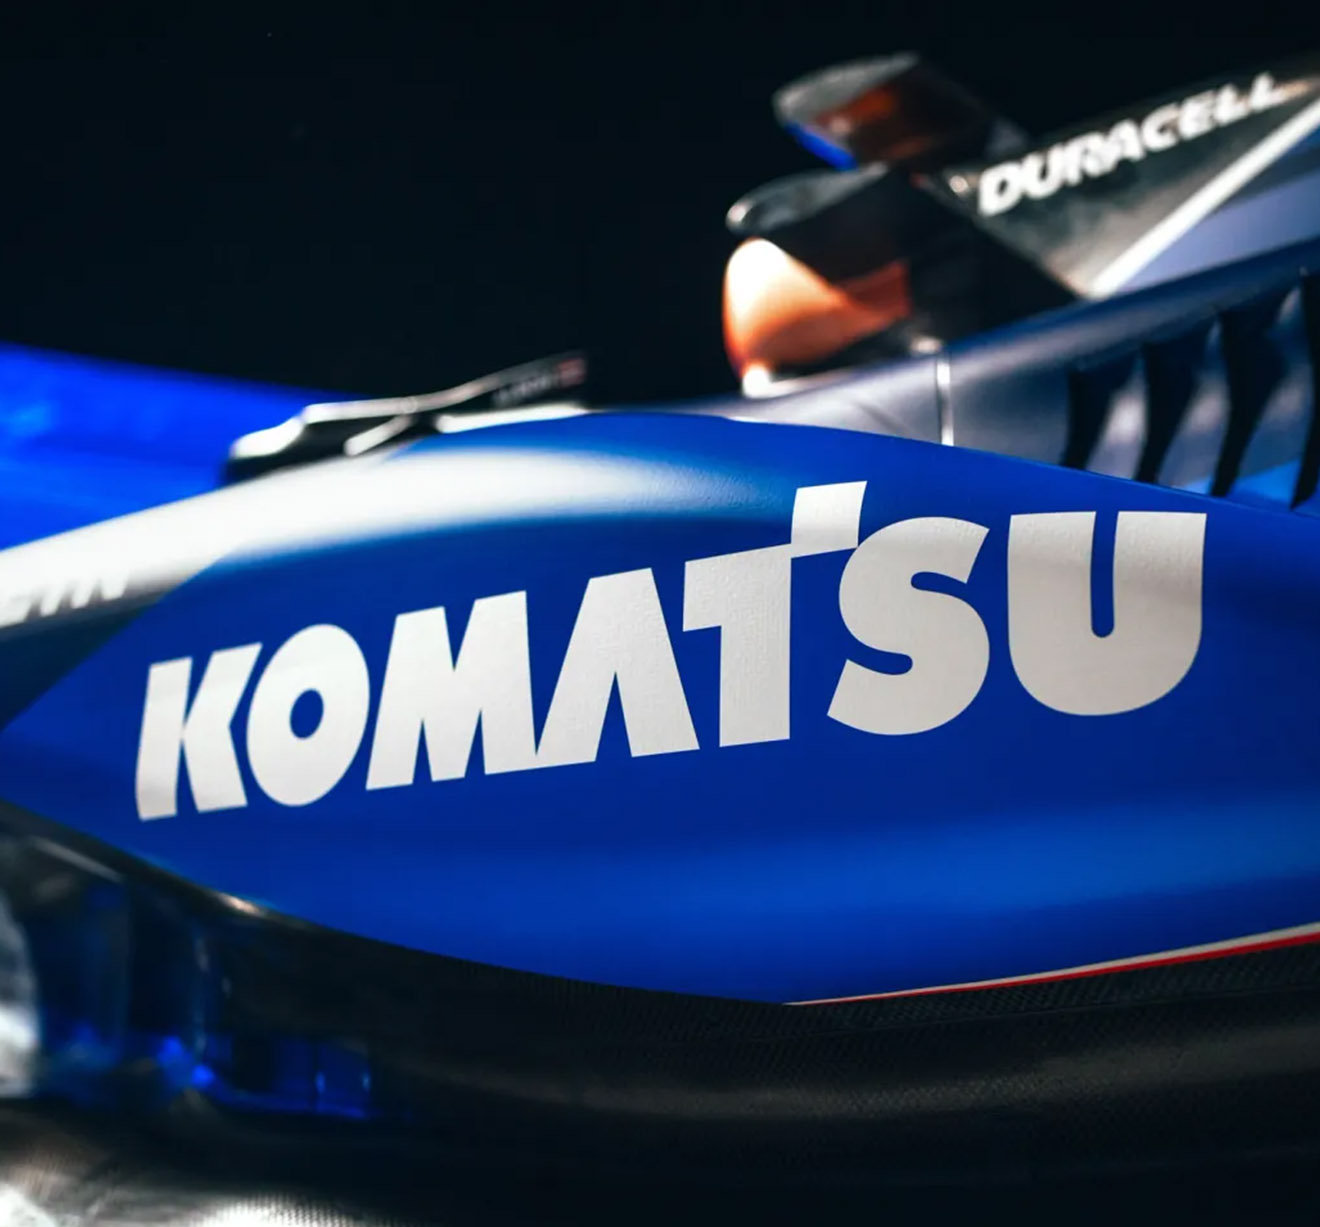 Komatsu et Williams Racing relancent un partenariat historique